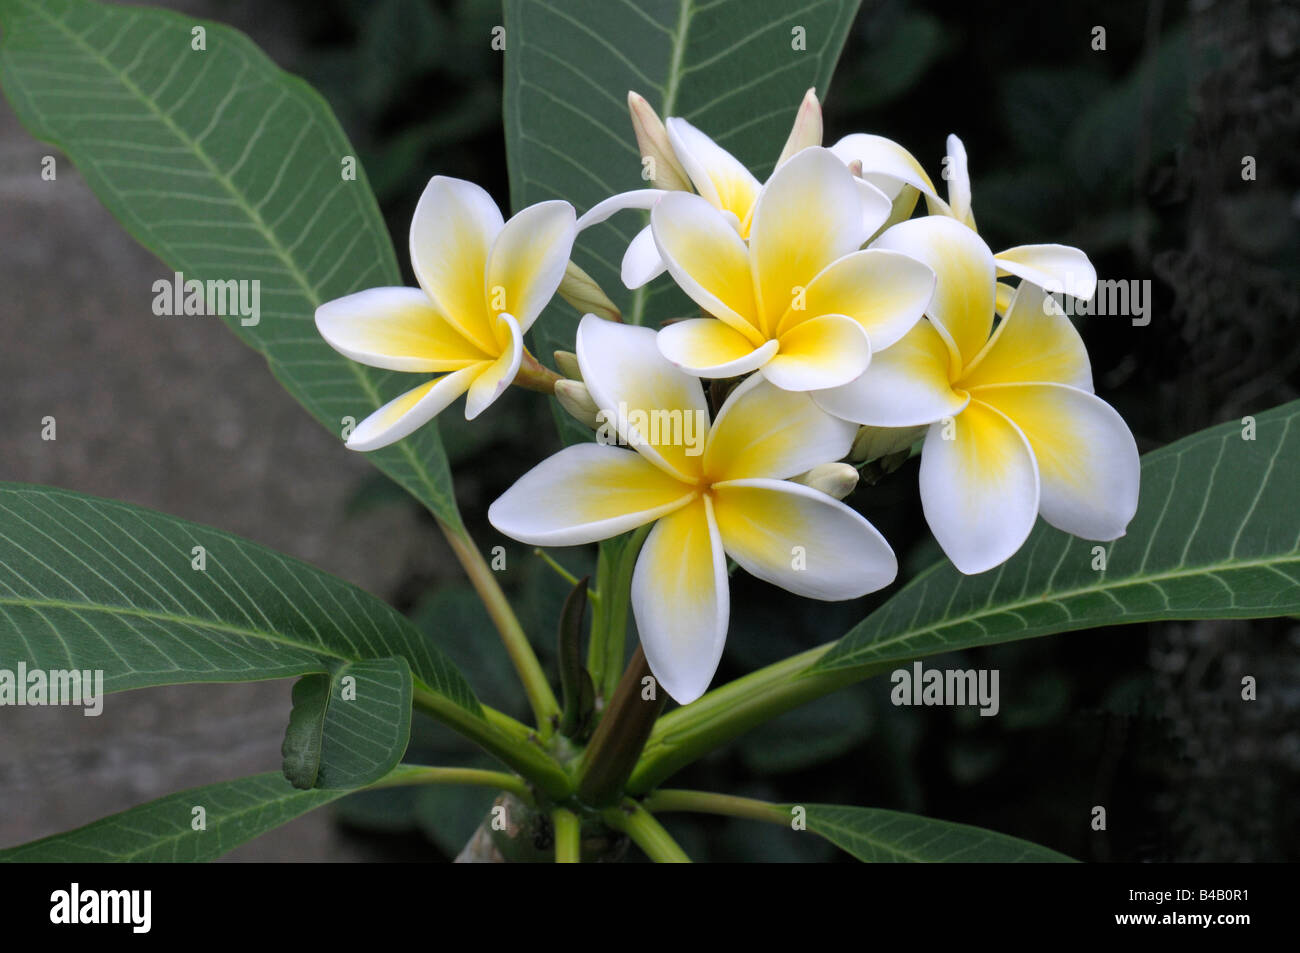 White Frangipani, West Indian Jasmine (Plumeria alba), flowering twig Stock Photo